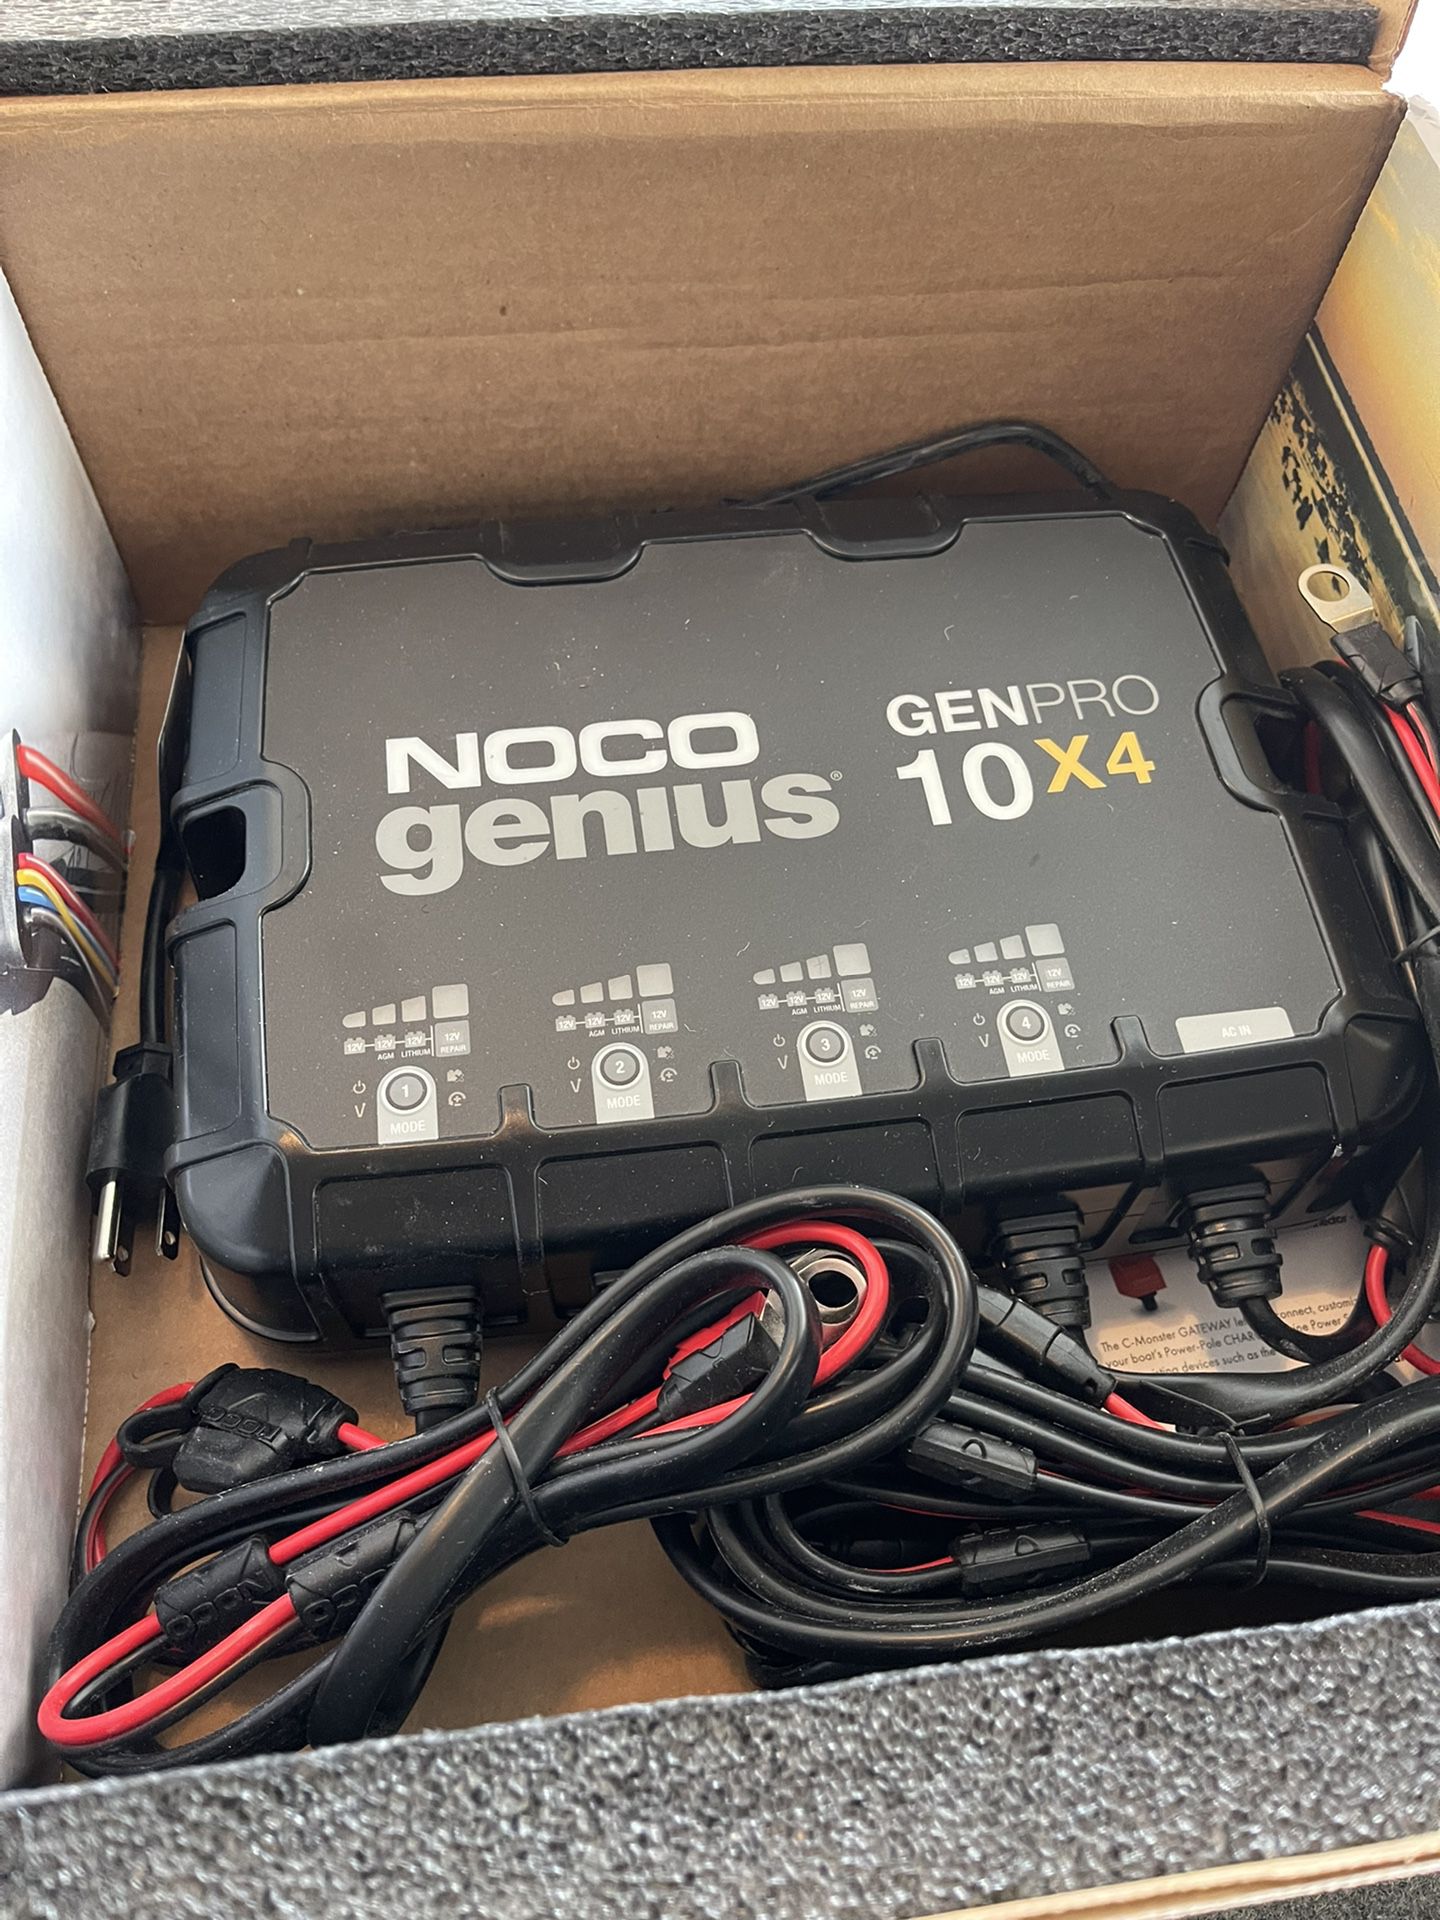 NOCO genius Gen pro 10x4 Battery charger